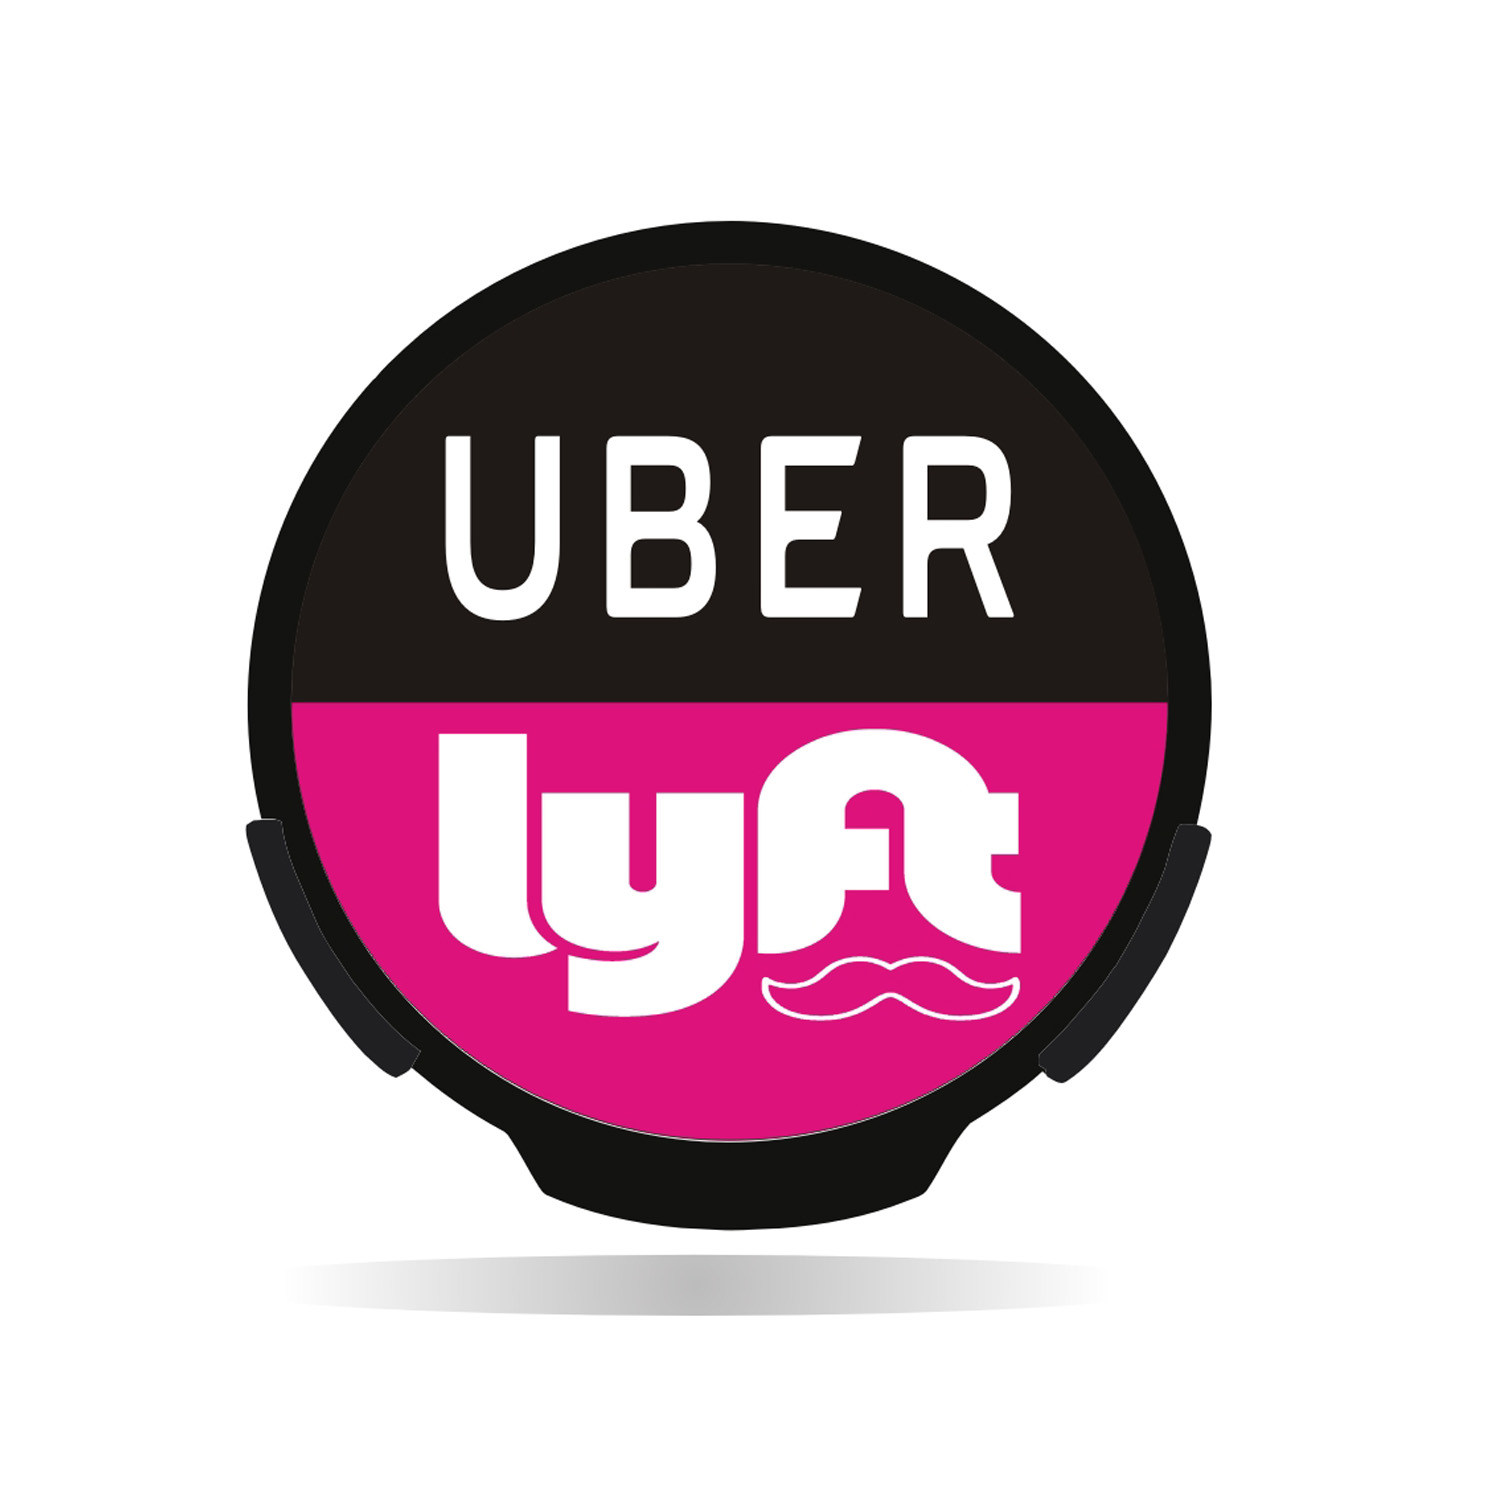 Uber Lyft LED Sign Light Car Window Powered Badges On / Off Switch Reproduktion för taxichaufför